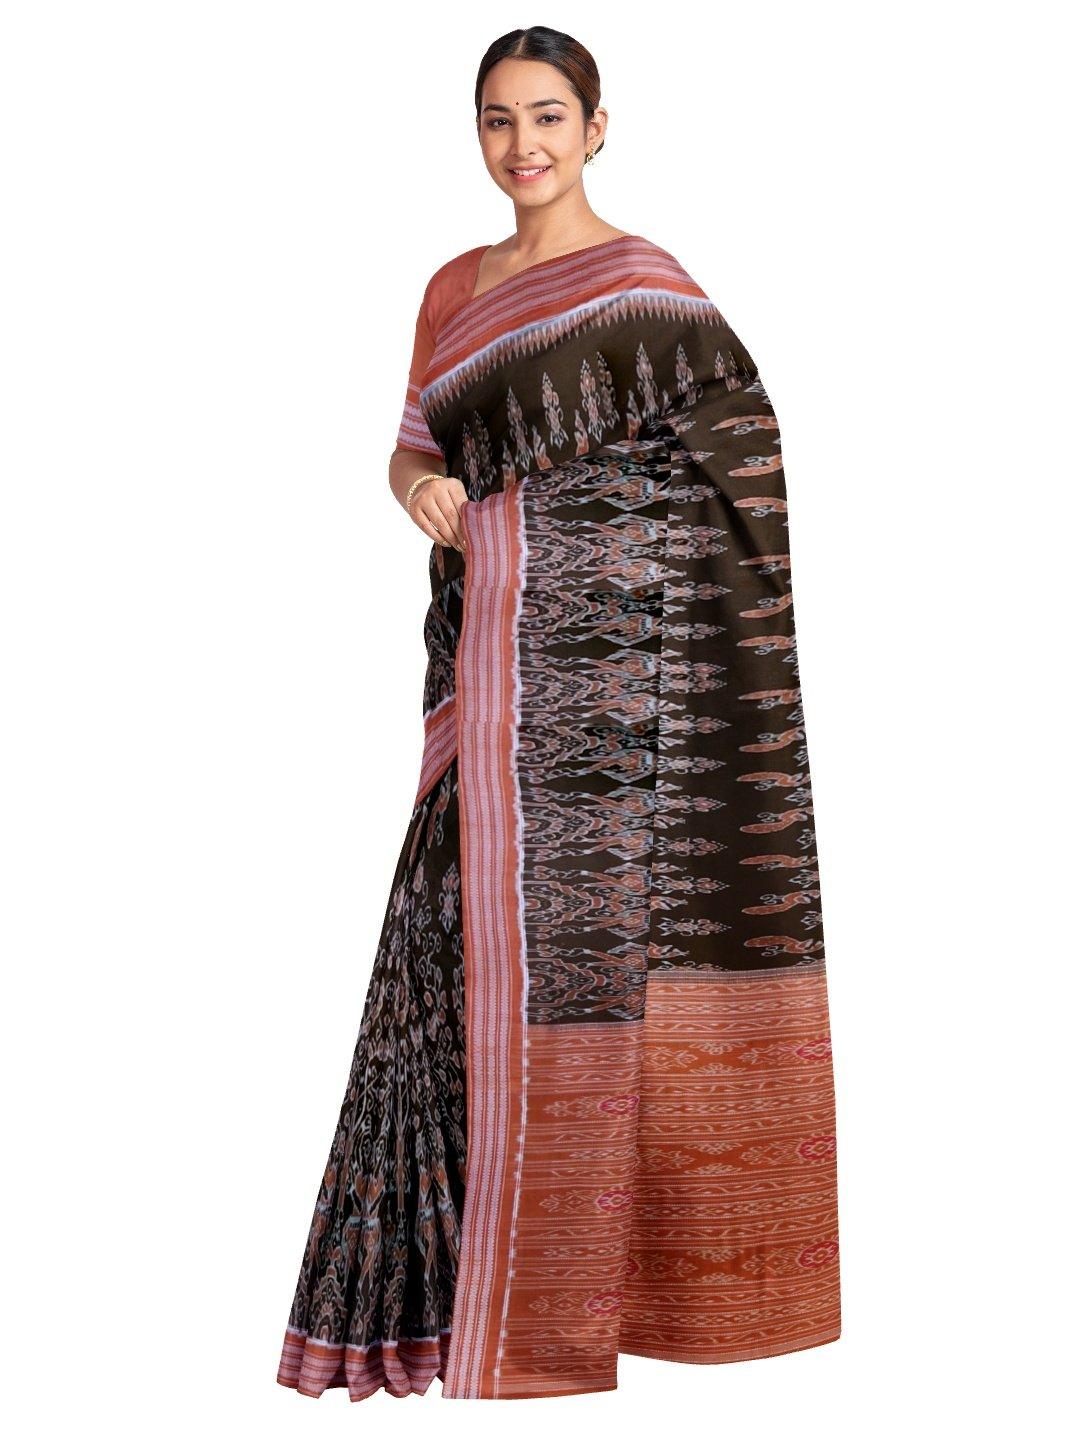 A Symphony of Saris - Indoindians.com